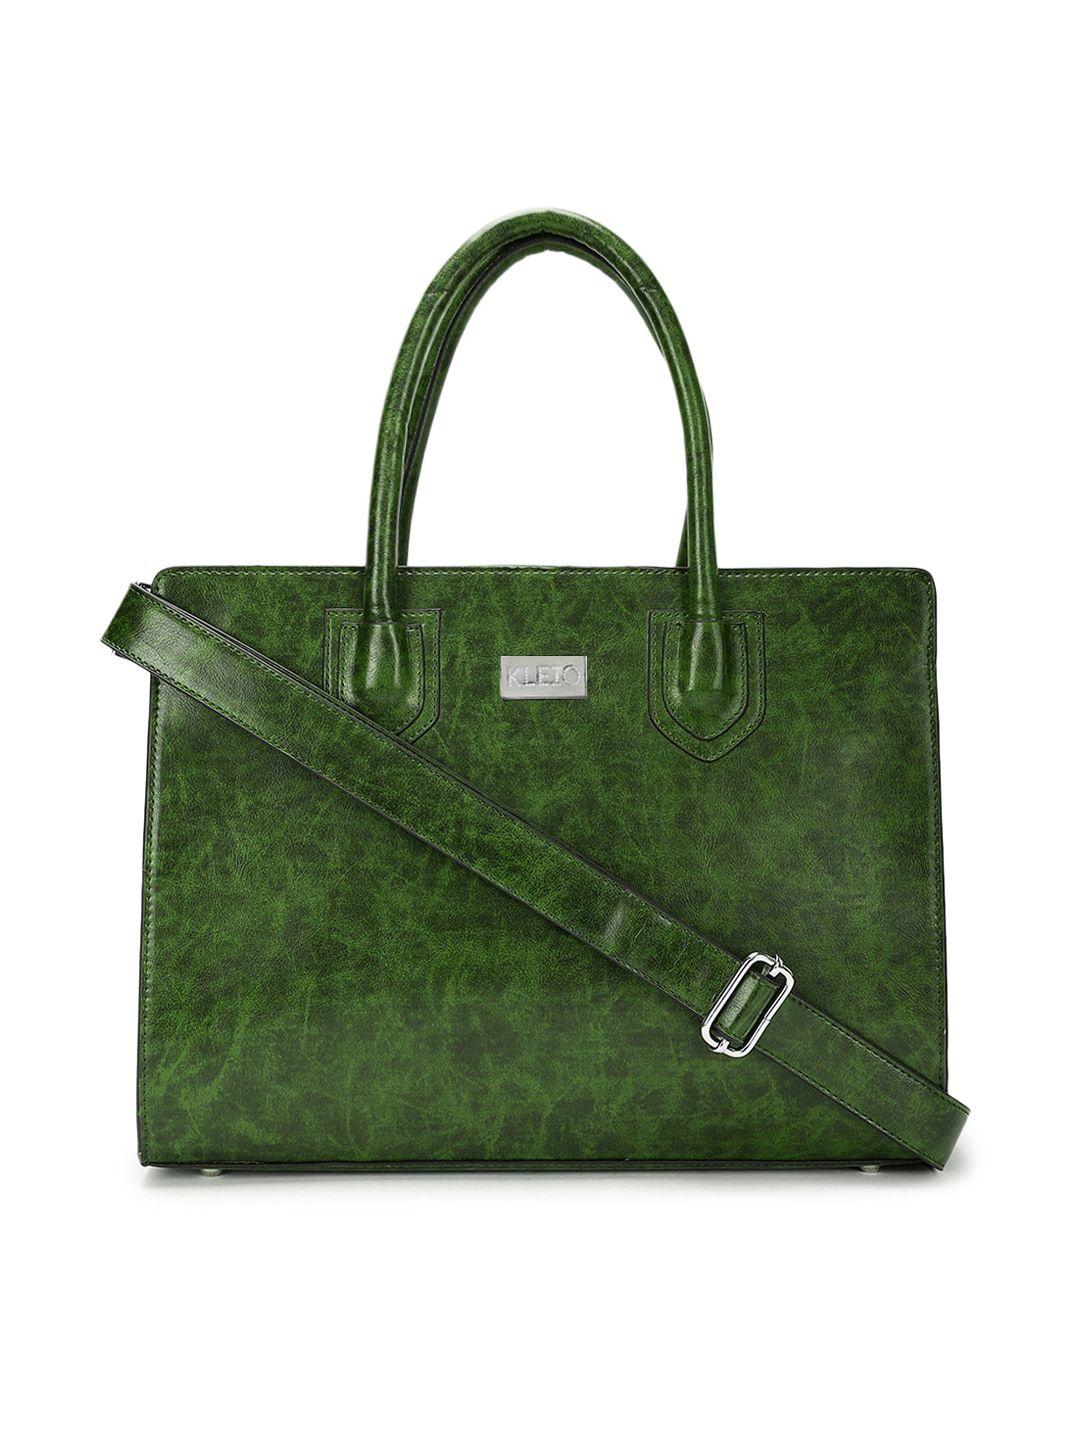 kleio olive green textured shopper handheld bag